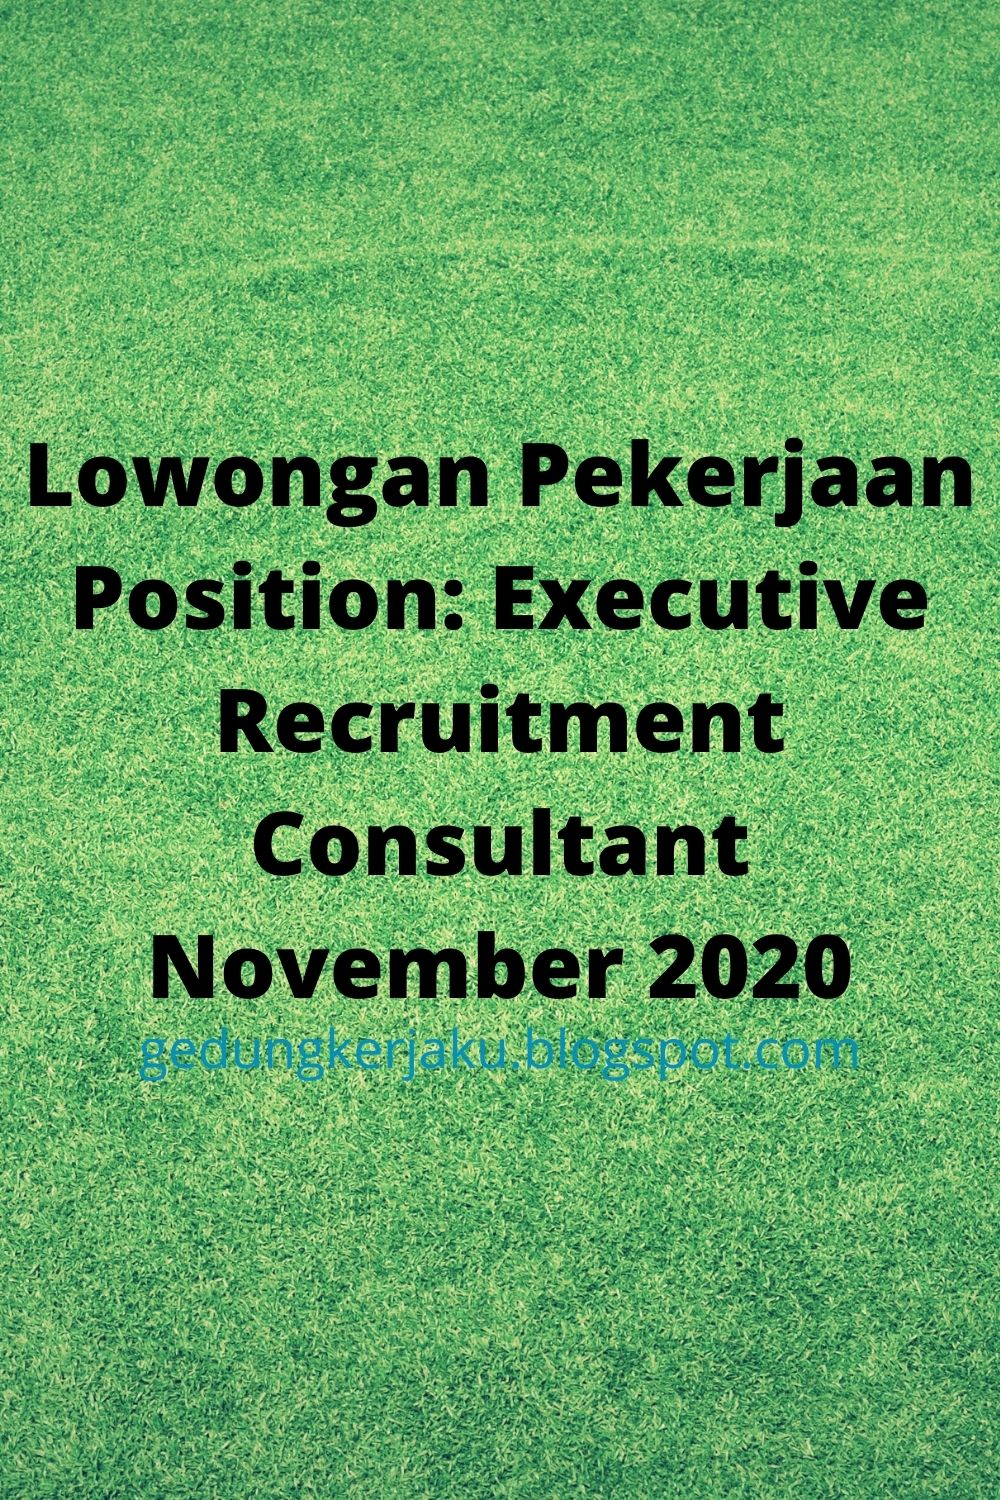 Lowongan Pekerjaan Position: Executive Recruitment Consultant November 2020